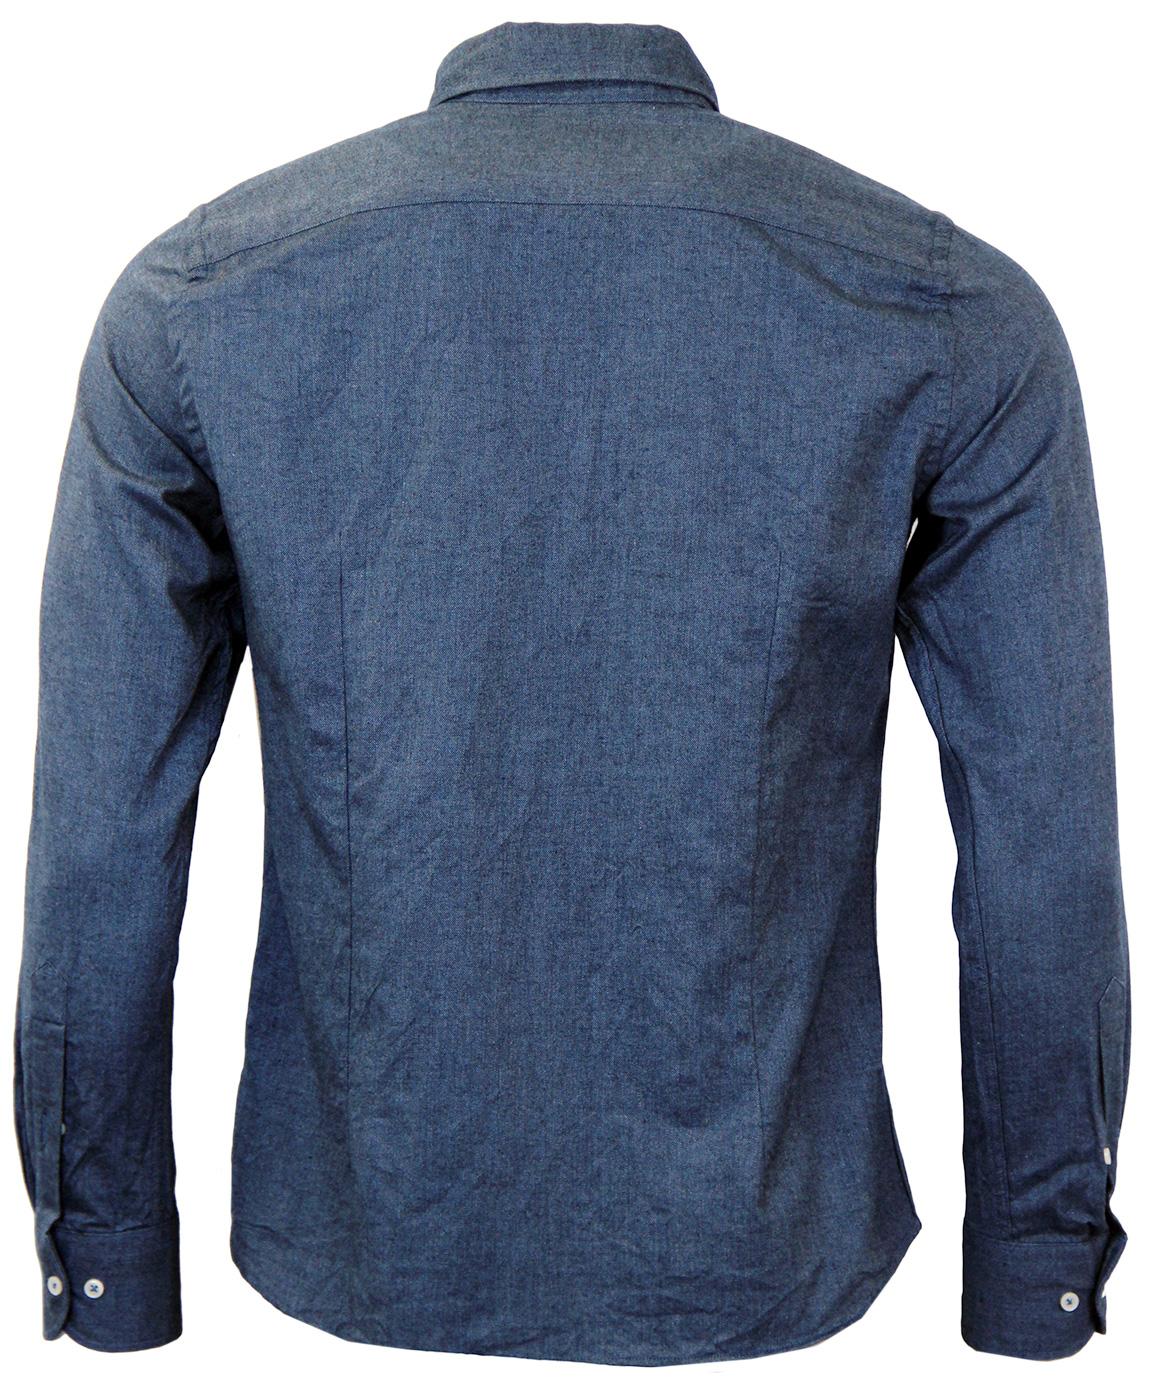 B D BAGGIES Dexter Retro Mod Oxford Shirt Blue